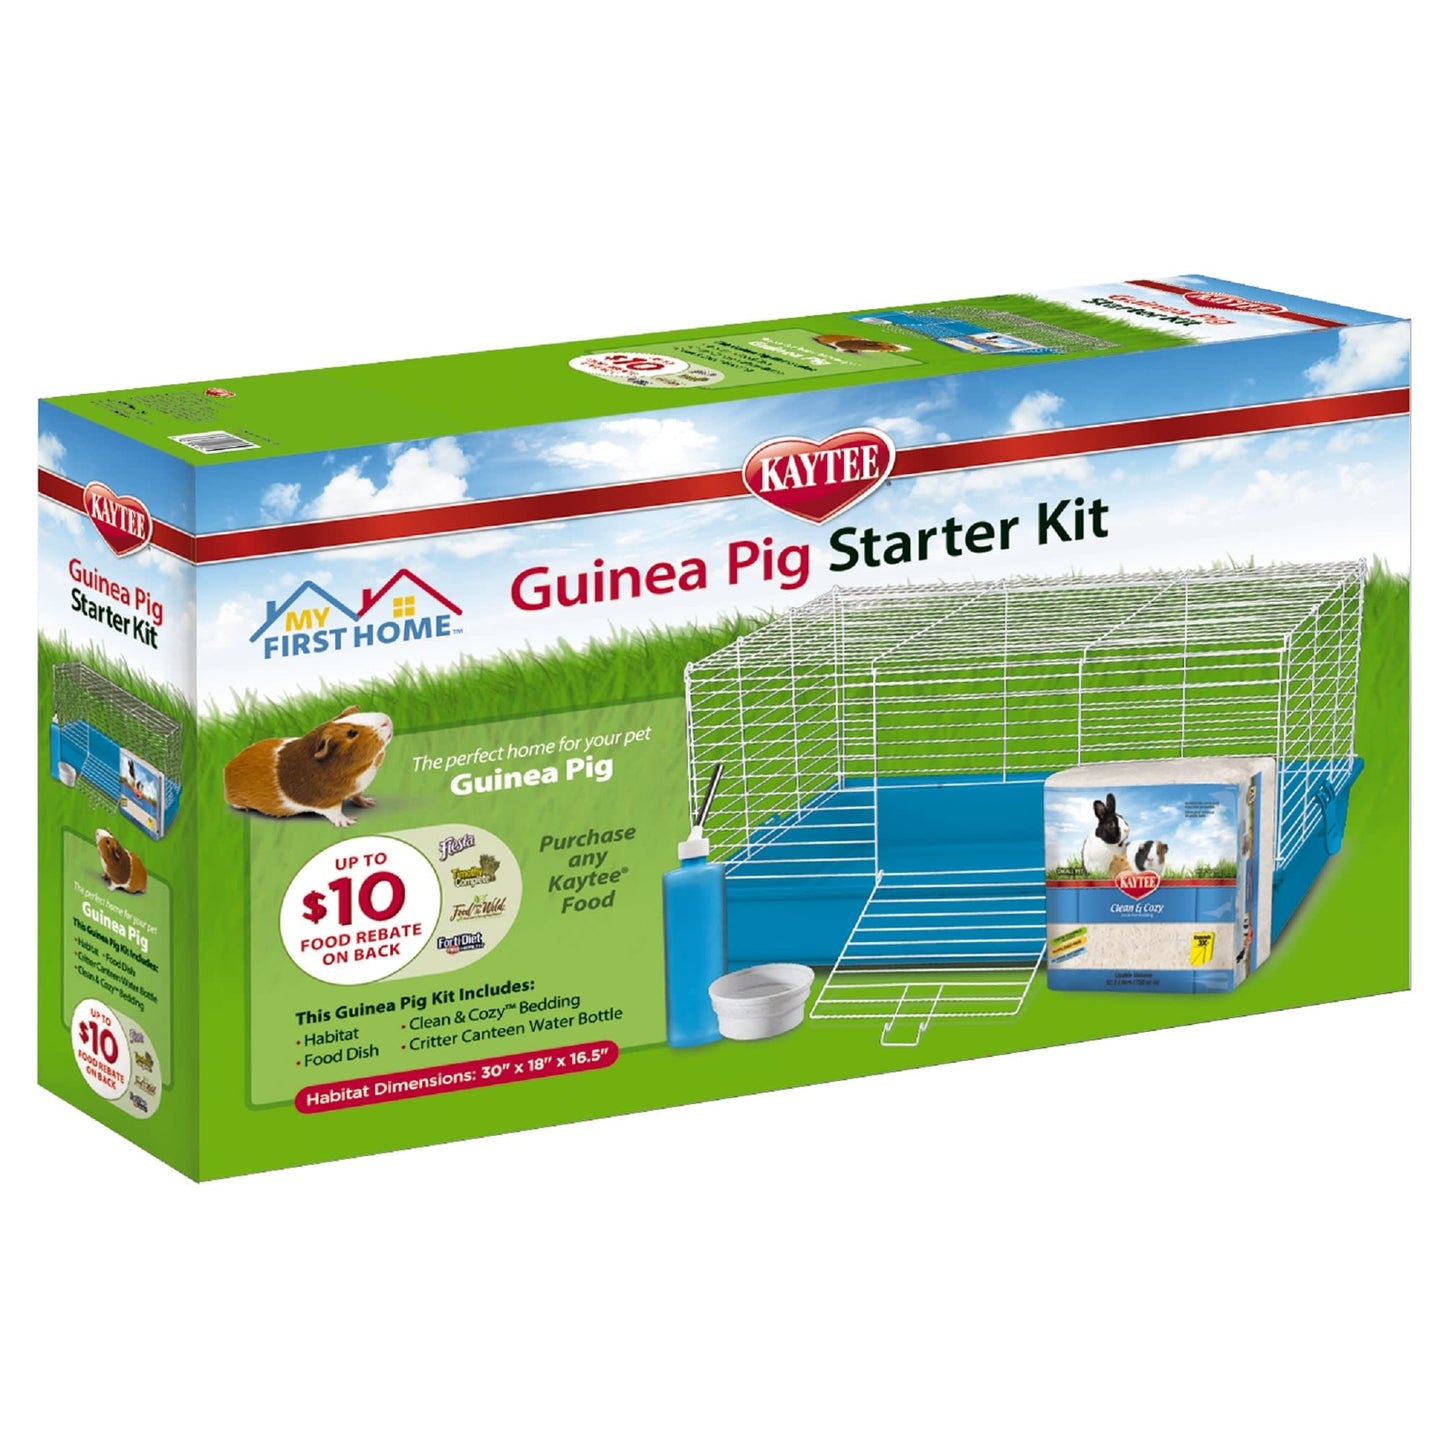 Kaytee My First Home Guinea Pig Starter Kit 30  x 18  x 16.5